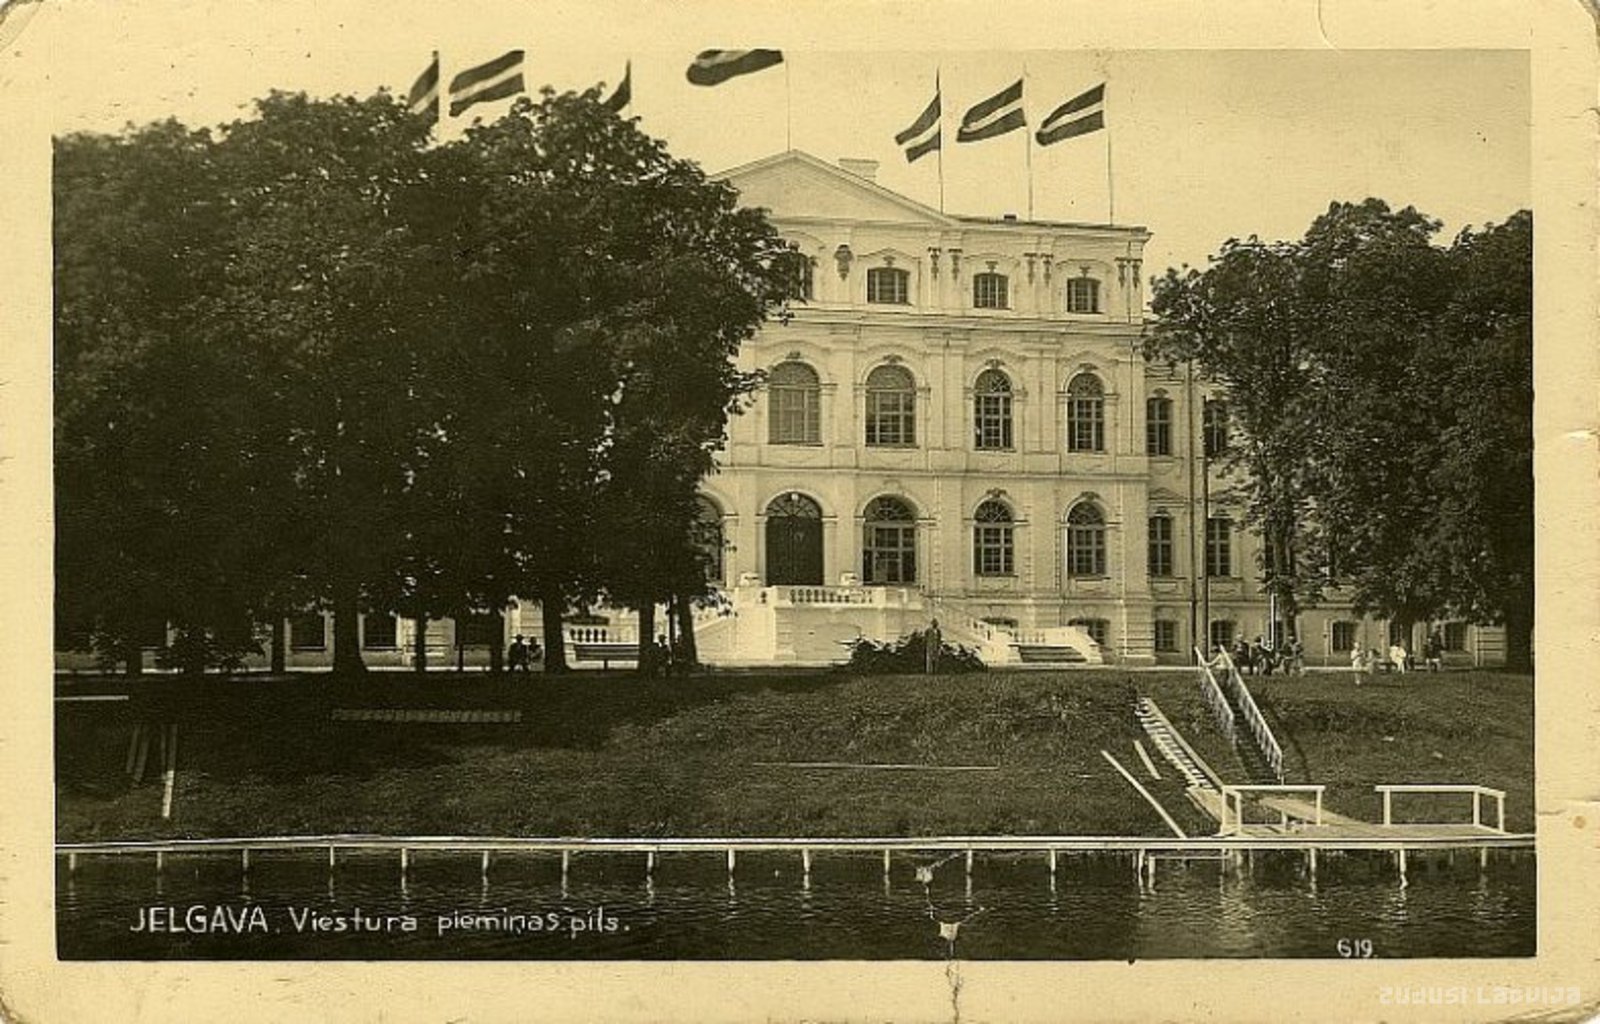 Jelgava castle, Jelgava. Viestura Memorial Palace